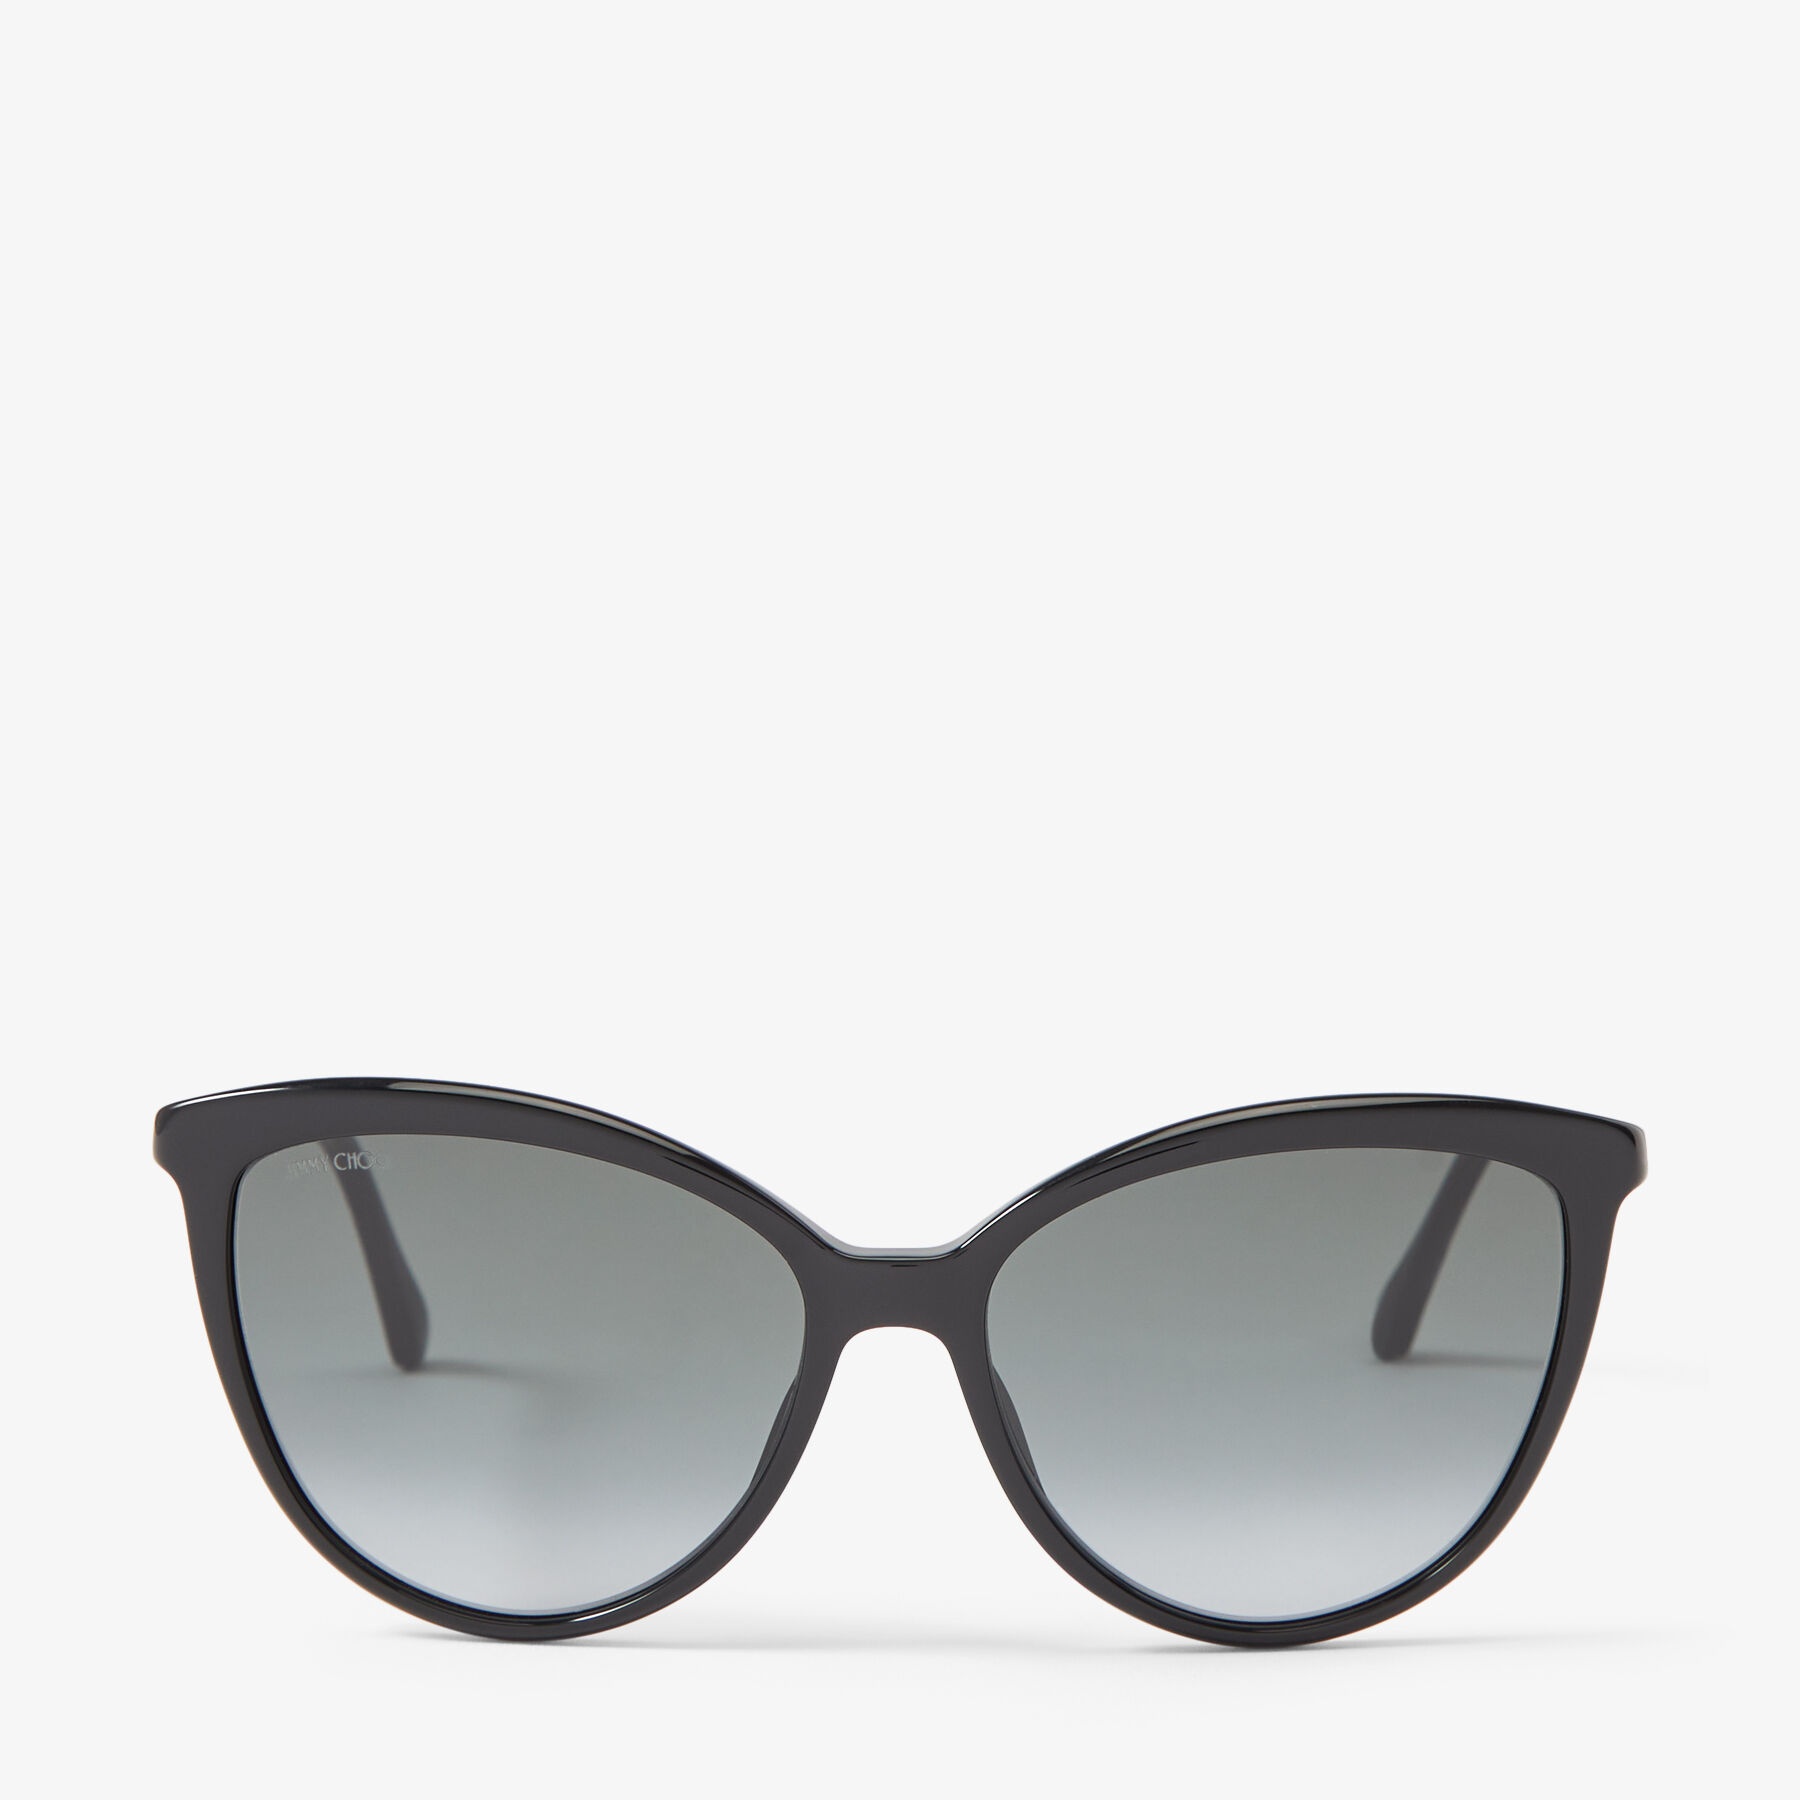 Belinda
Black Cat Eye Sunglasses with Swarovski Crystals - 1